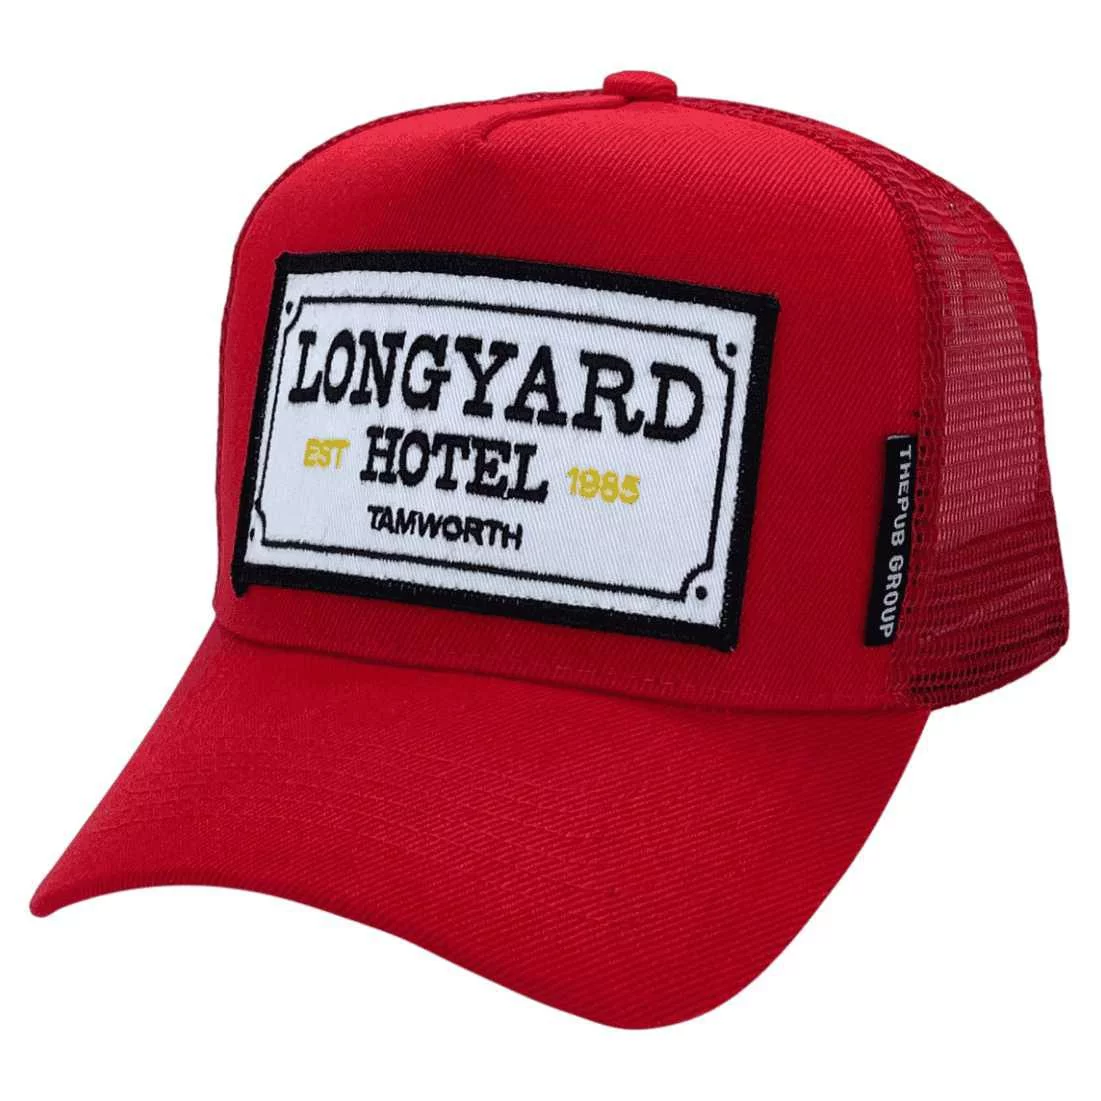 Longyard Hotel Tamworth NSW HP Original Basic Aussie Trucker Hat with Australian Head Fit Crown Acrylic Red